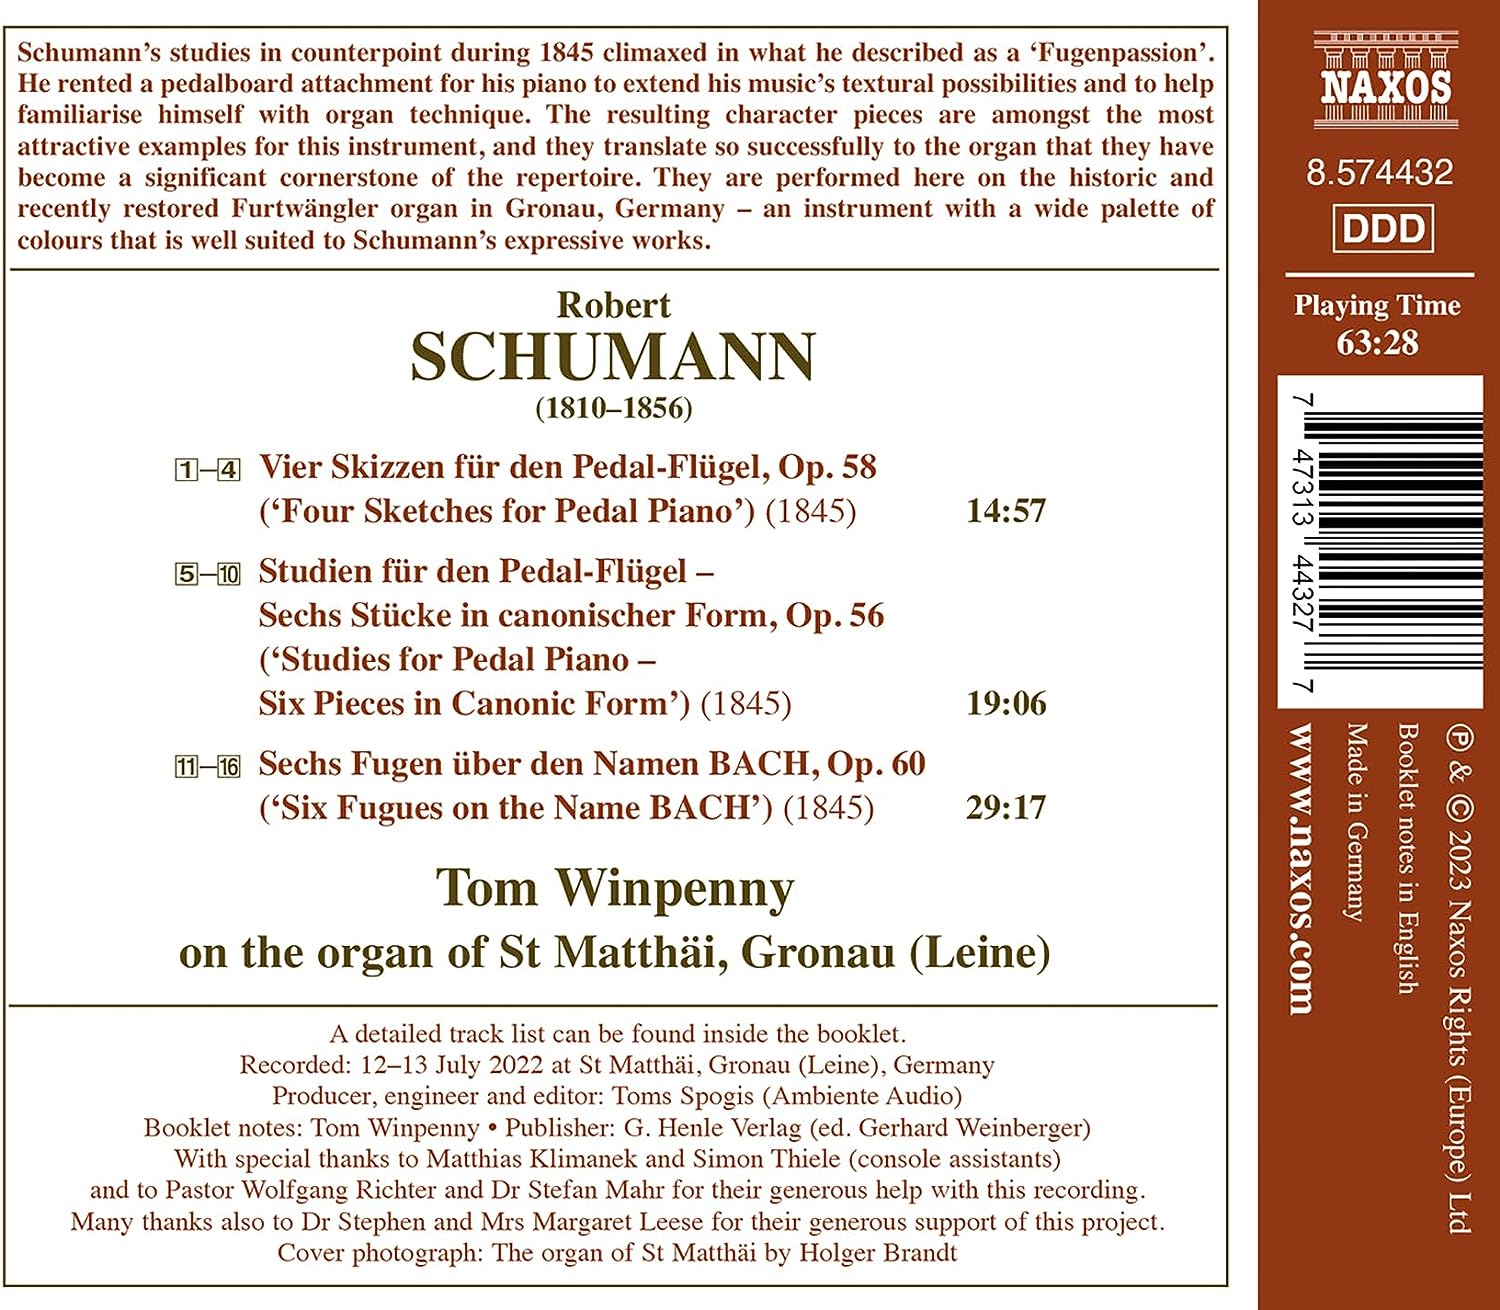 Tom Winpenny 슈만: 오르간 작품 전집 (Schumann: Complete Organ Works)